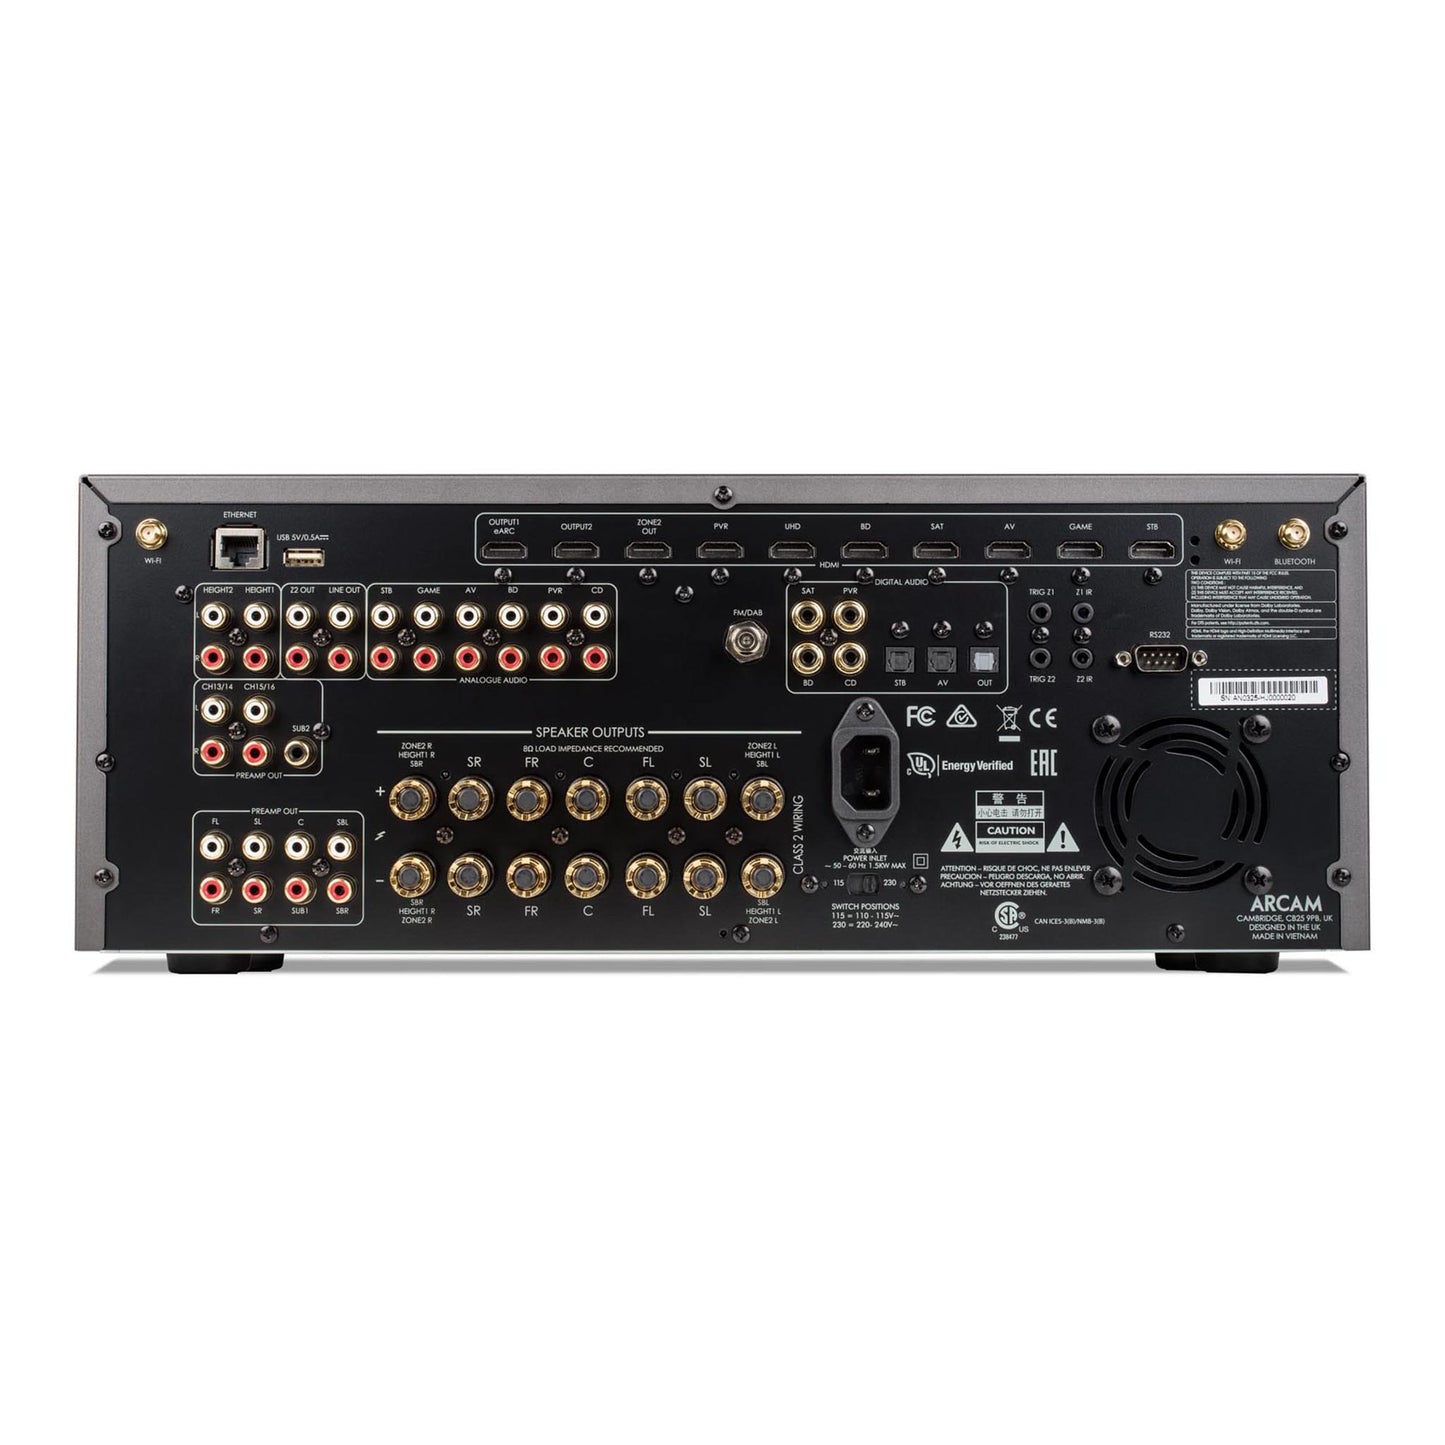 Arcam AVR31 15.2 Pre-Amplifier / 7 Amplifier Channel Class G AV Receiver